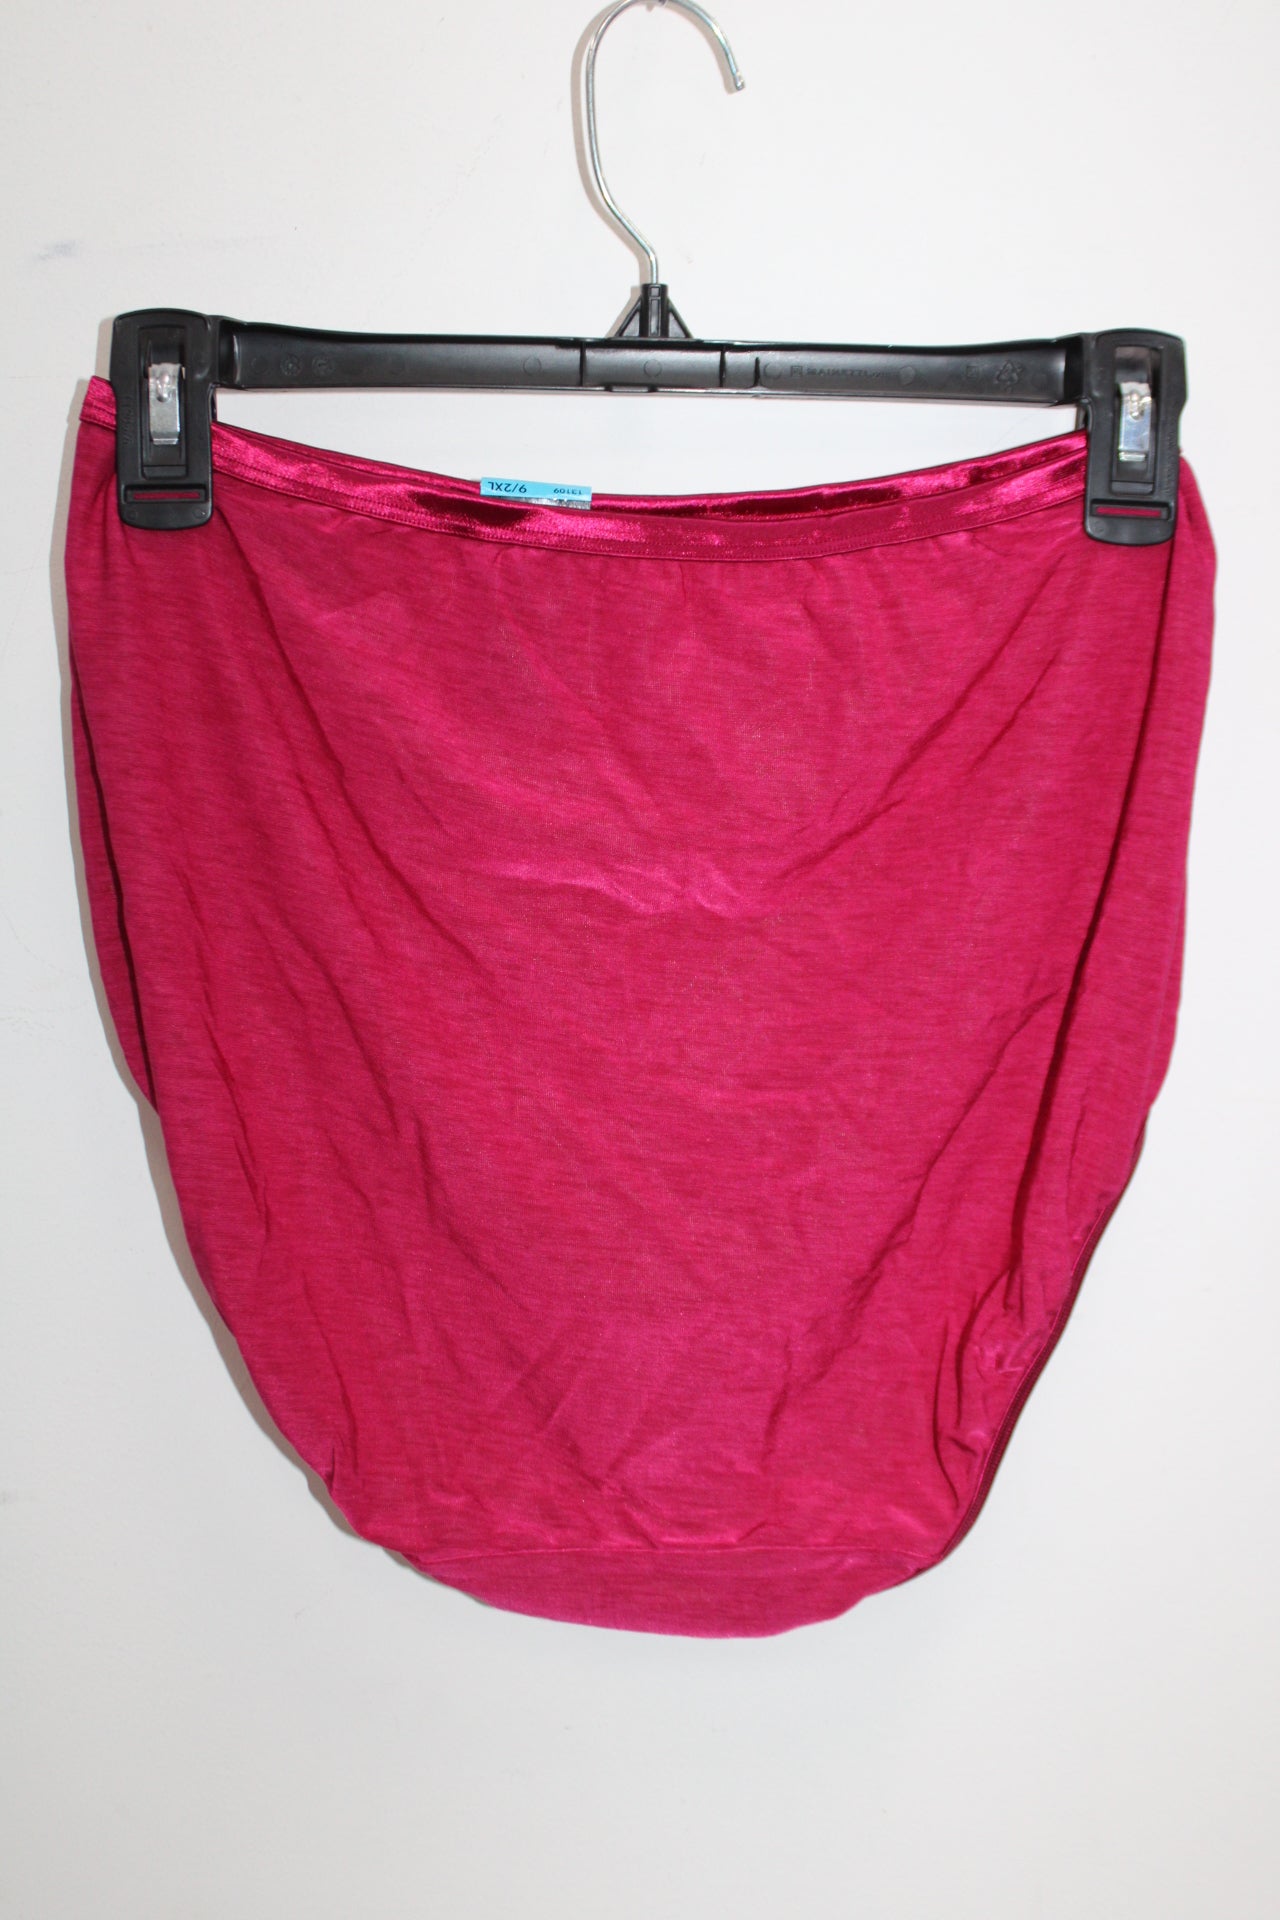 Vanity Fair Women's Illumination Brief Panty 13109, Pomegranate, 2X-Large/9